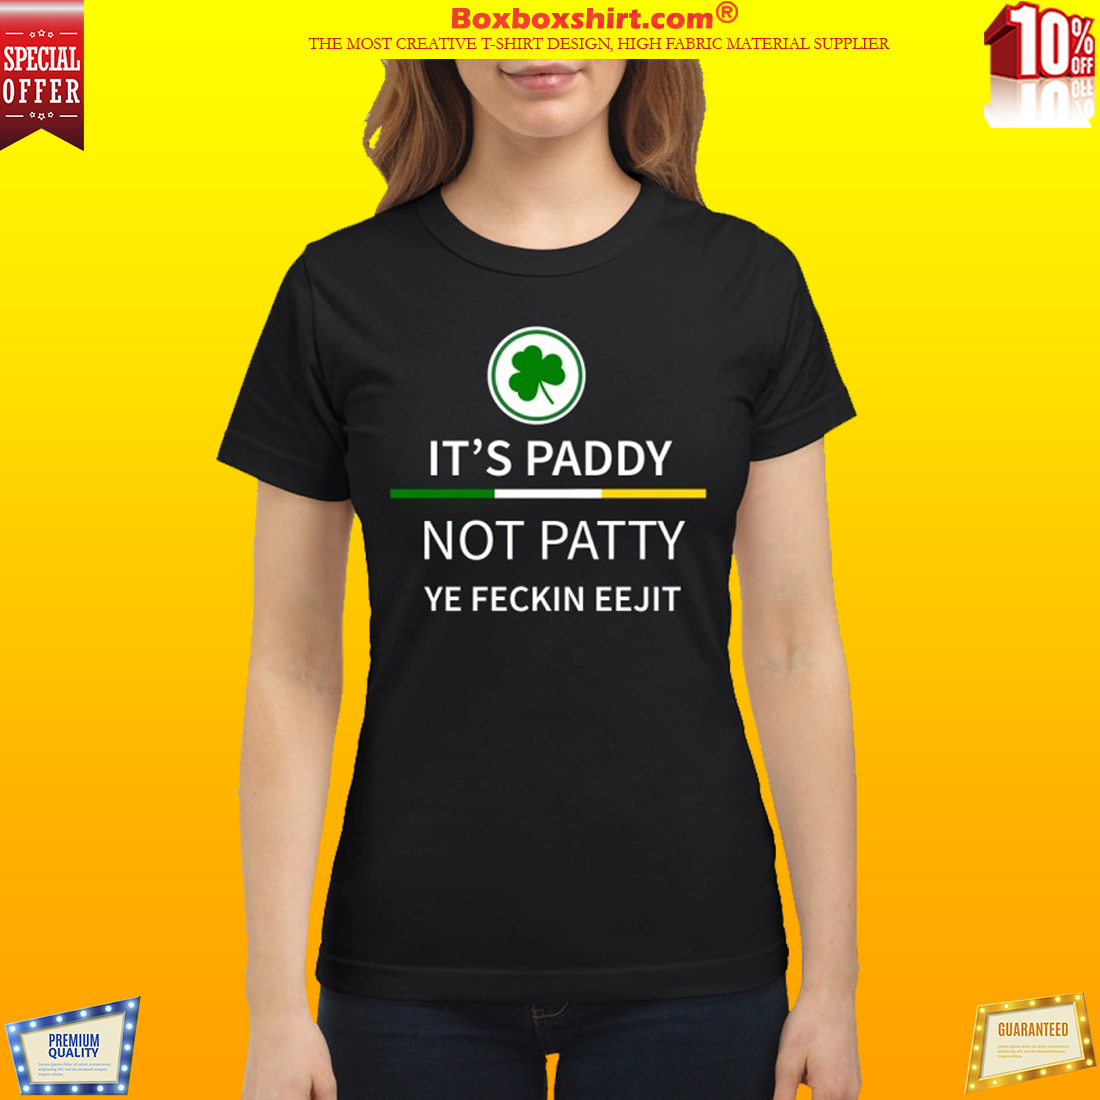 It's paddy not patty ye feckin eejit classic shirt